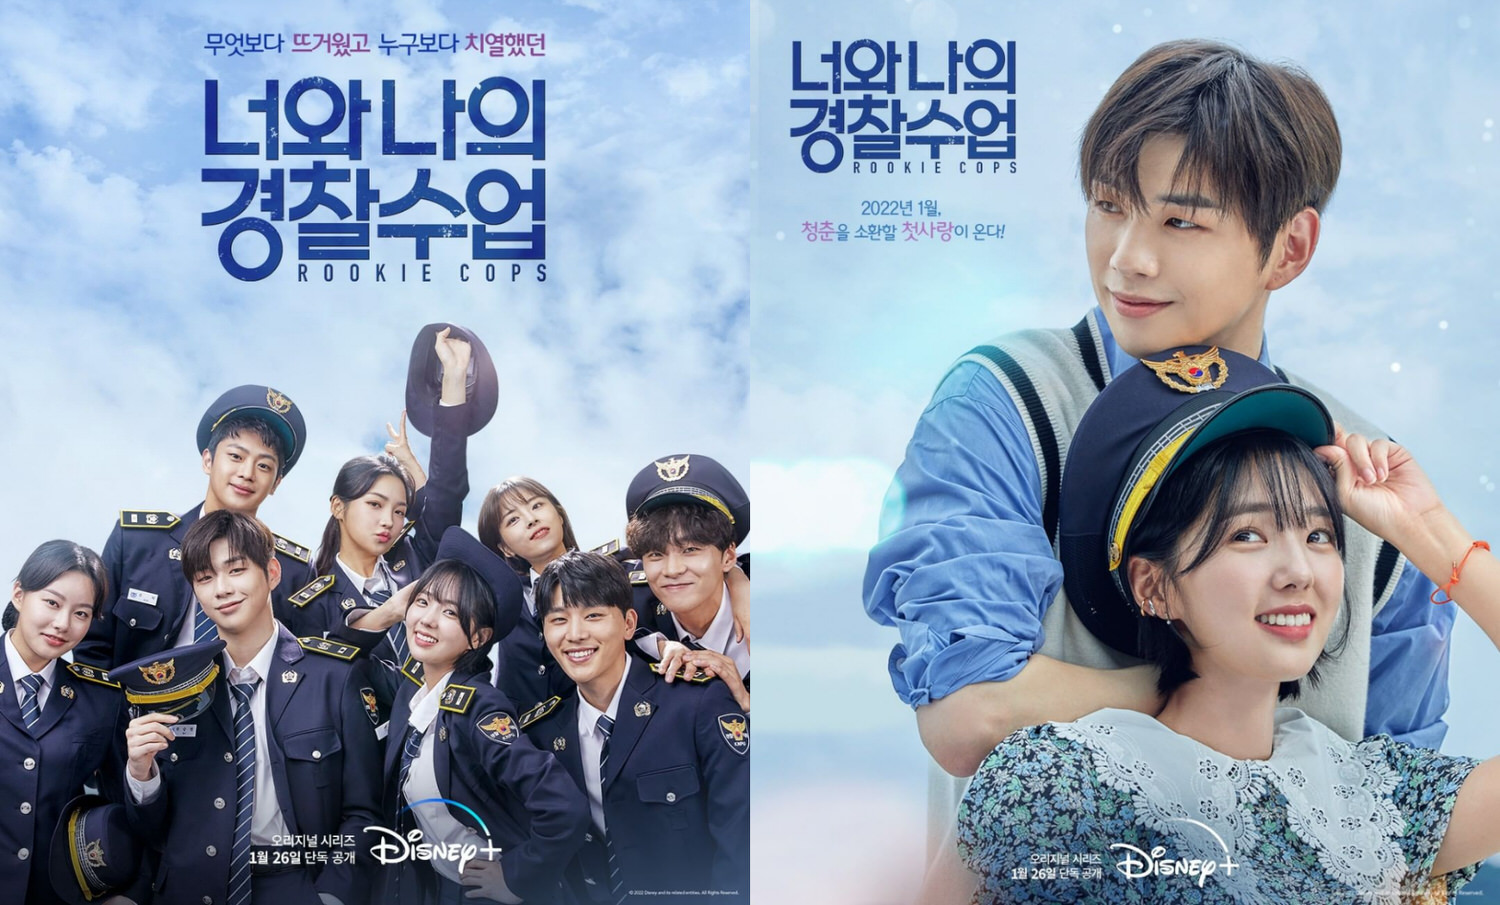 Disney+韓劇《警校菜鳥》姜丹尼爾、蔡秀彬、李新英、朴柔娜、閔都凞、千英民